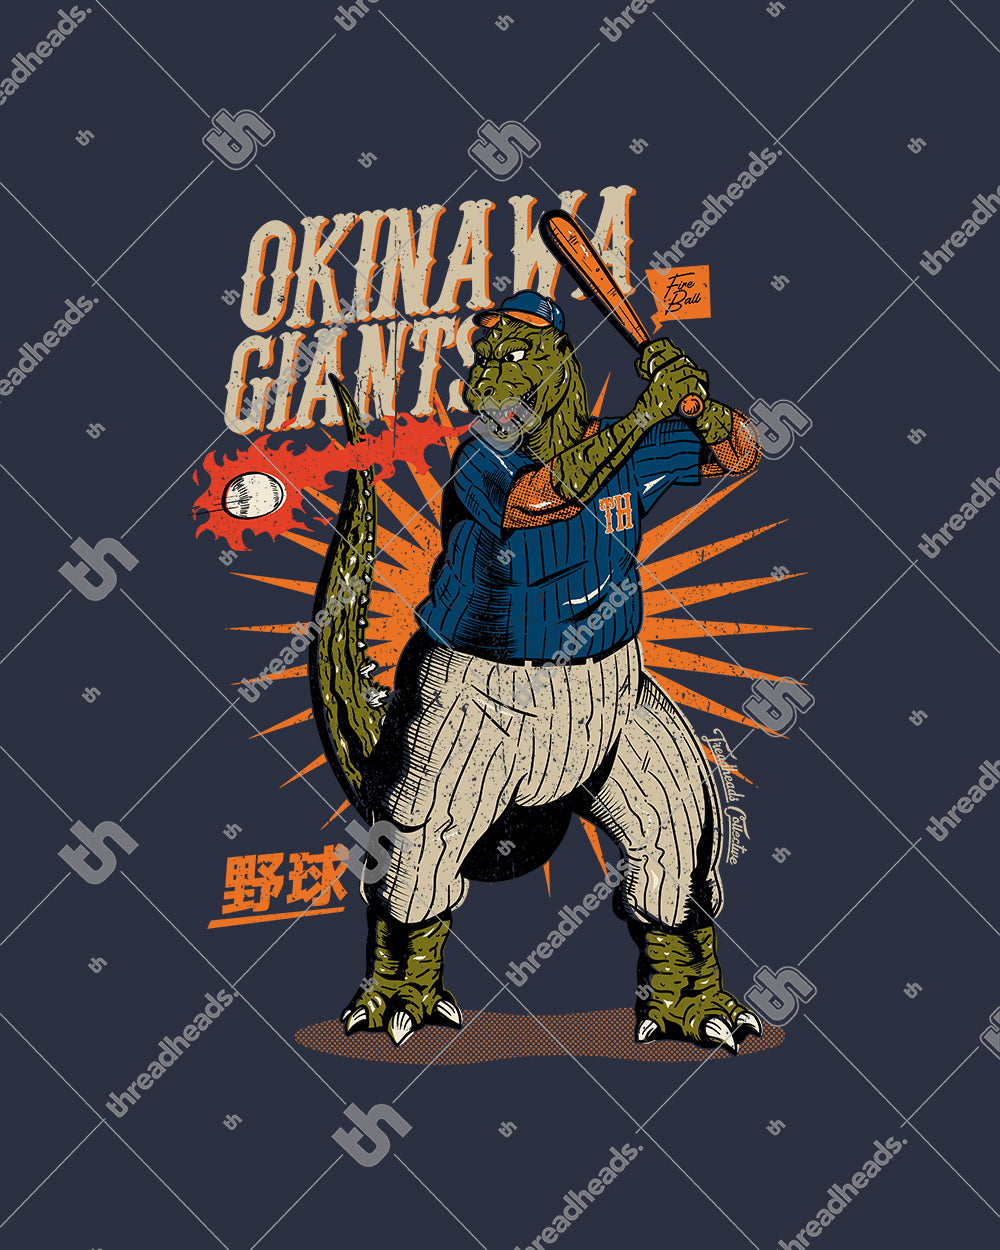 Okinawa Giants Sweater Europe Online #colour_navy